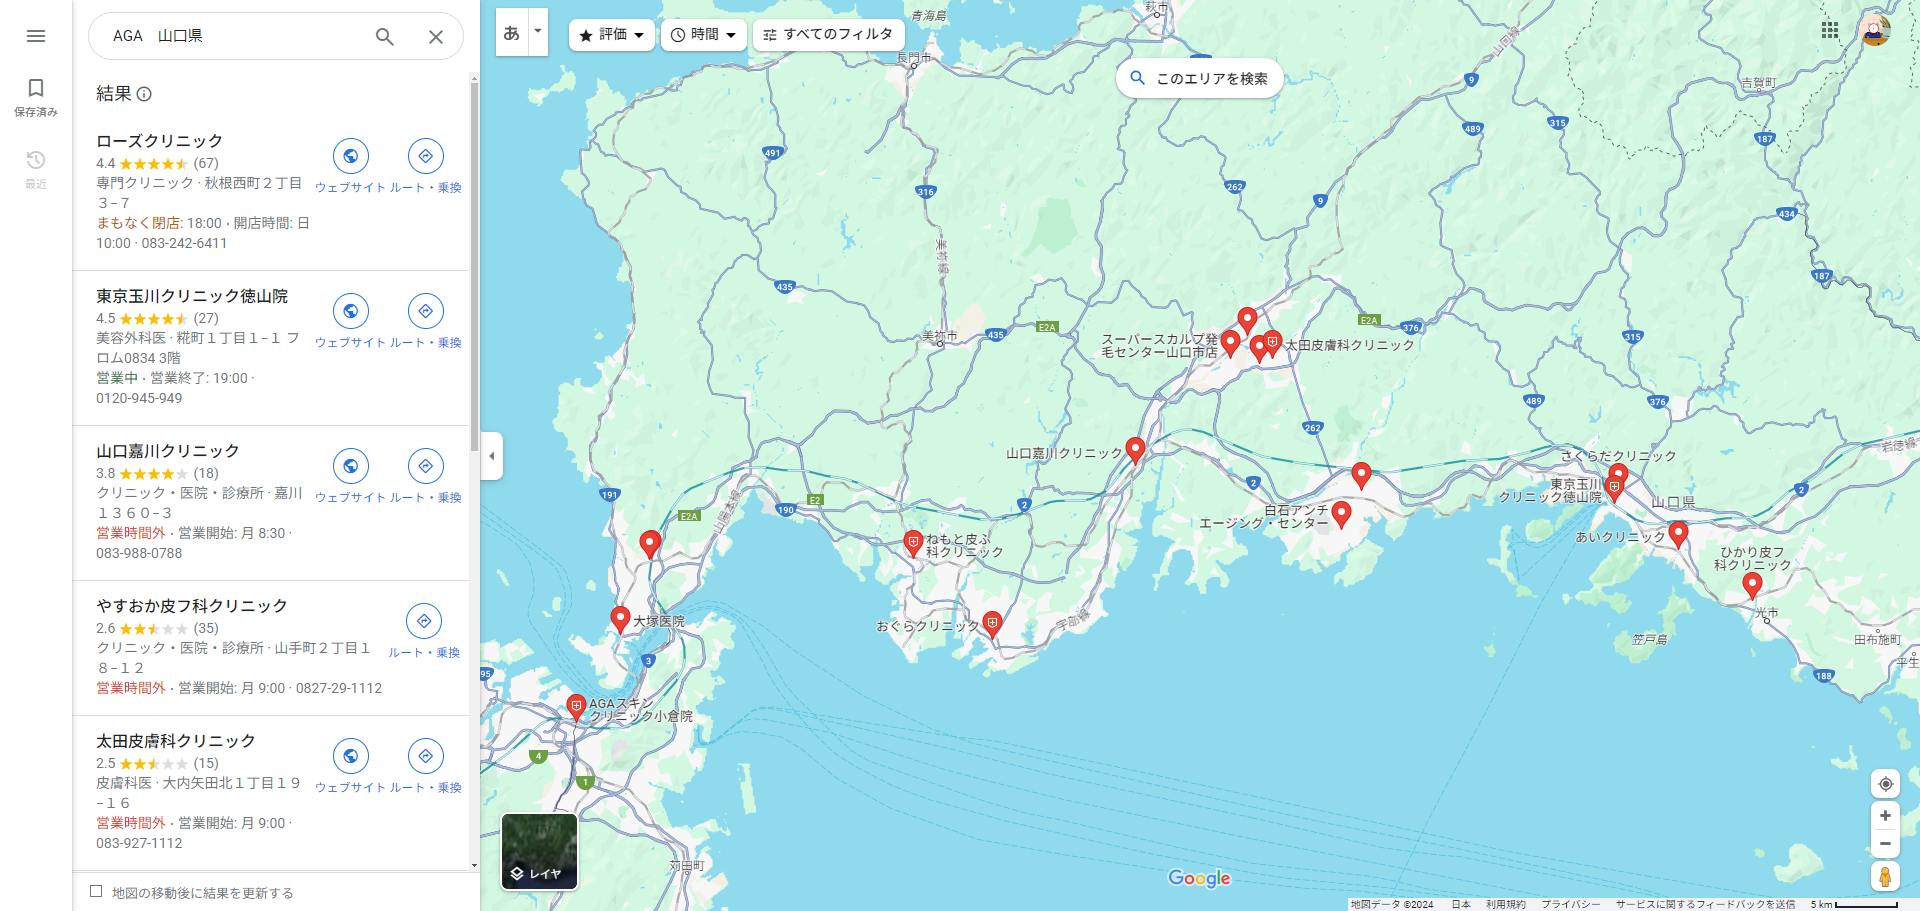 AGA-山口県-Google-マップ